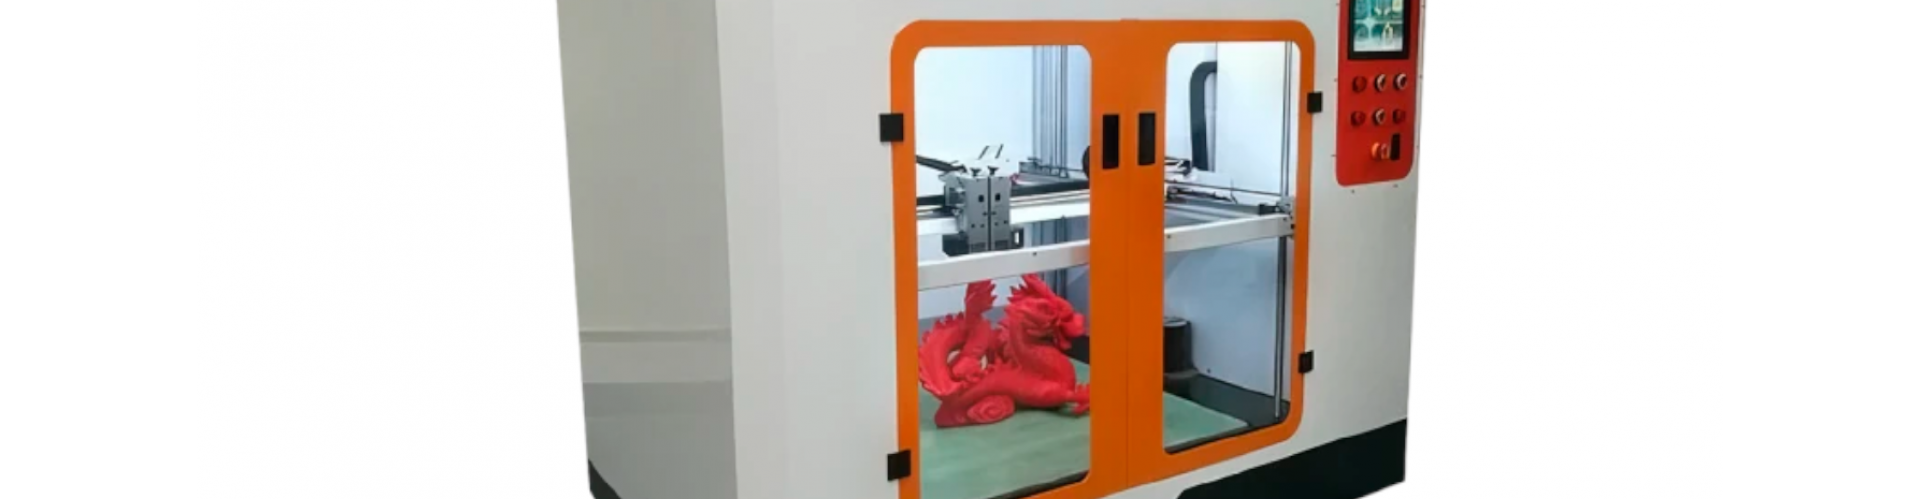 3D-принтер IEMAI YM-NT-1000: Обзор технических характеристик, преимуществ и безопасности